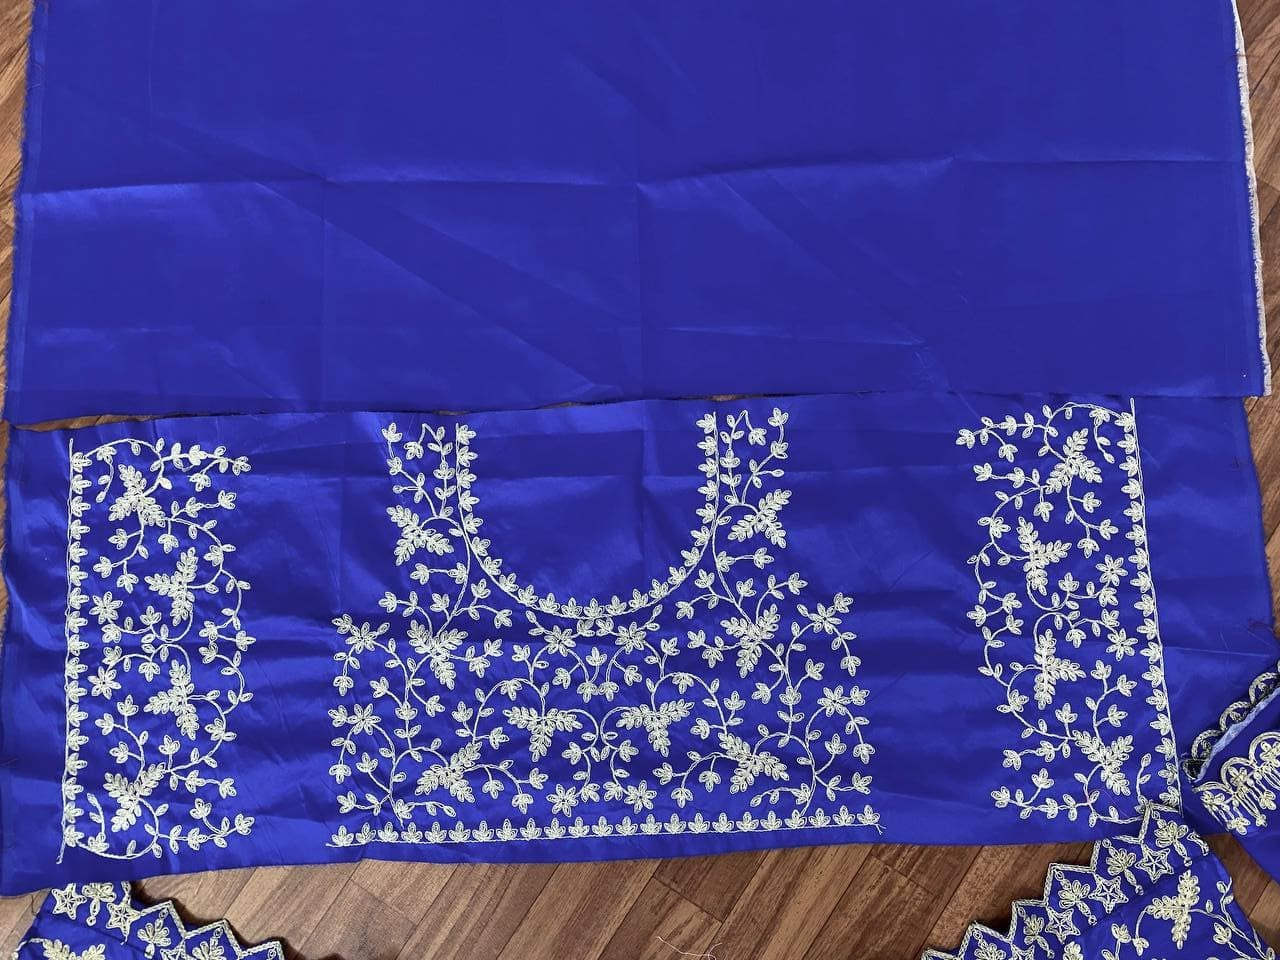 Royal Blue Lehenga Choli In Malai Satin Silk With Cording Work